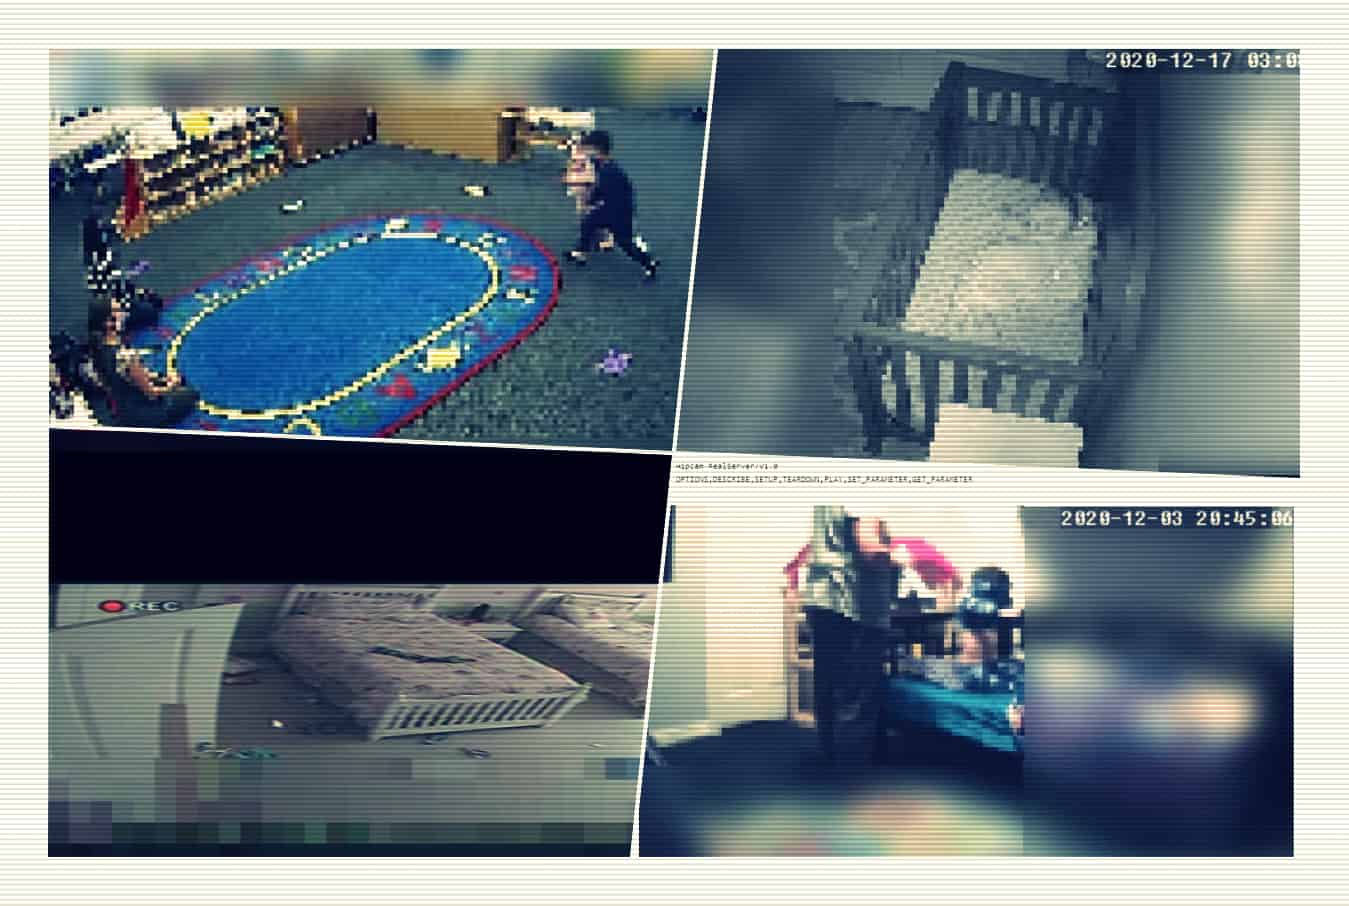 Misconfigured baby monitors exposing video stream online